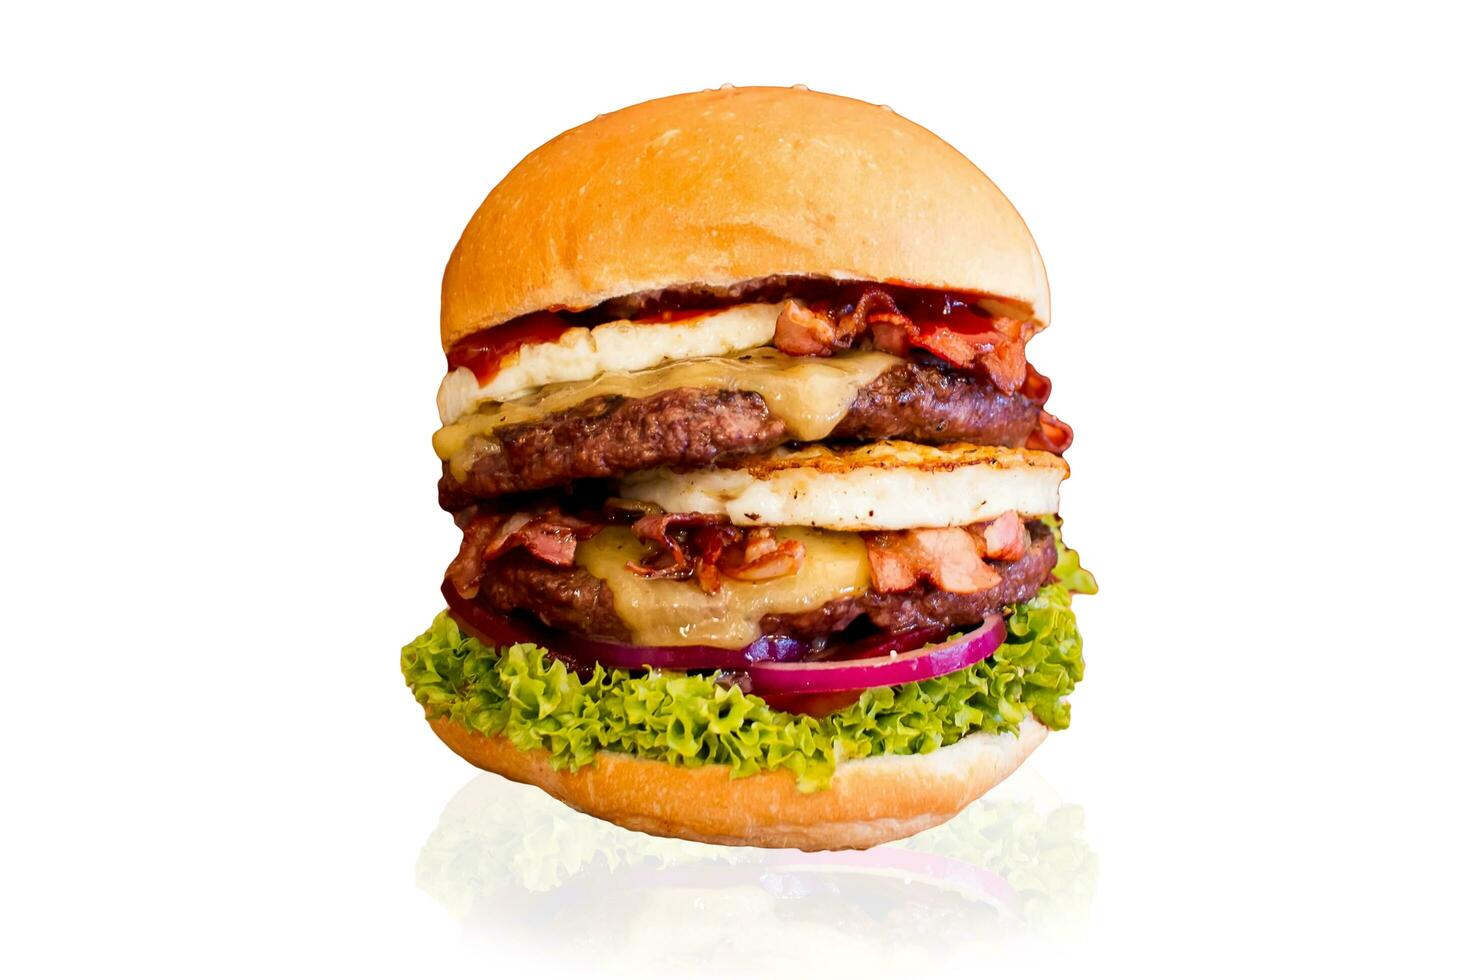 tararear hamburguesa, queso hamburguesa, vegetal hamburguesa, Comida rápida, carne de vaca hamburguesa, cebolla, pan, salsa de tomate foto